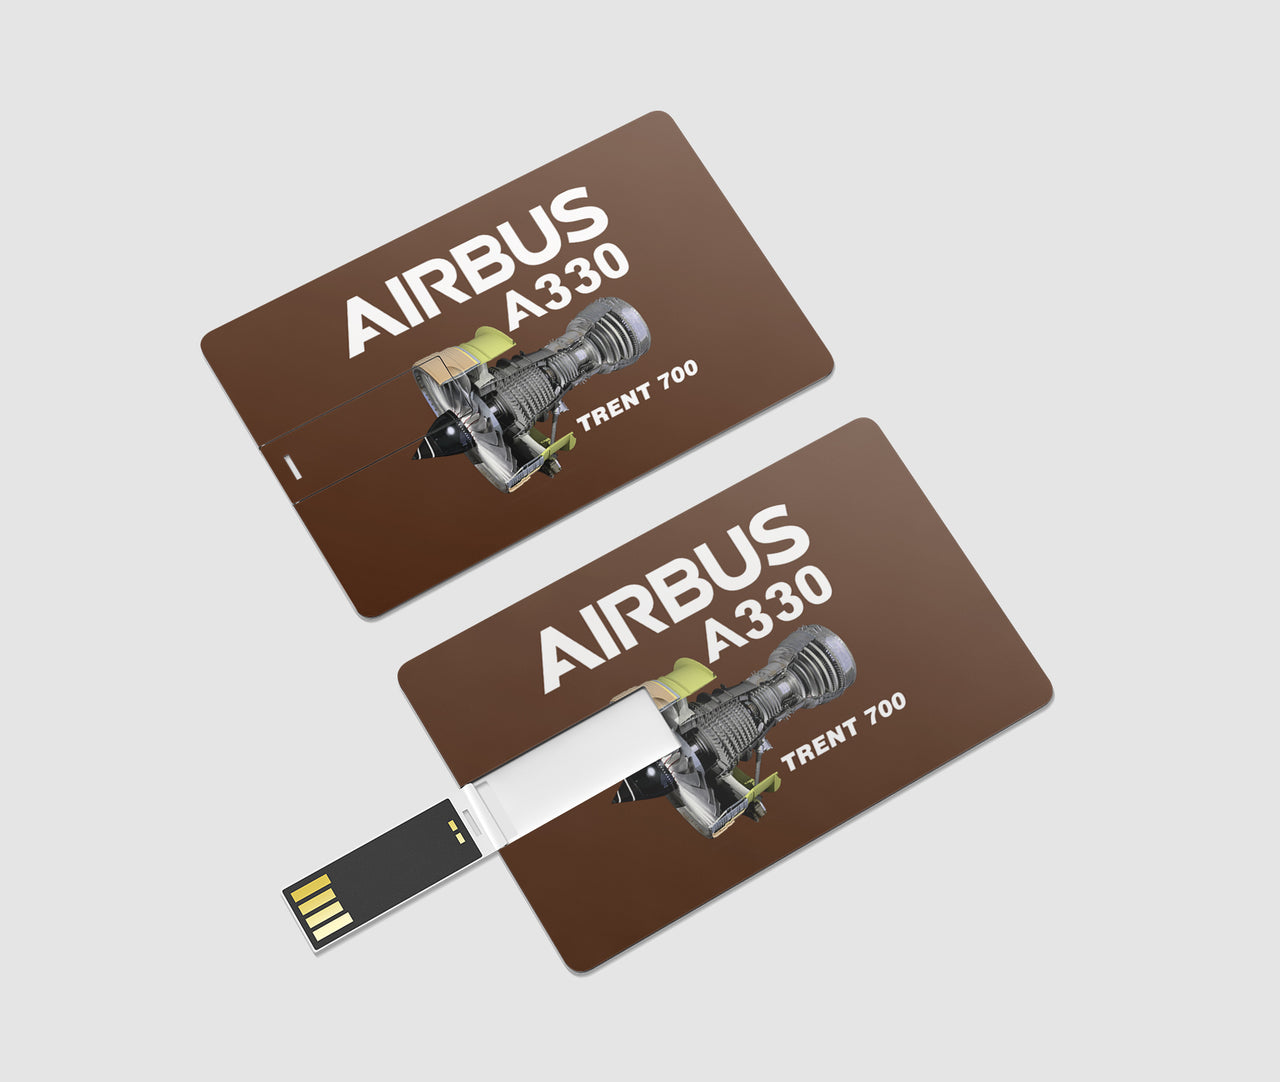 Airbus A330 & Trent 700 Engine Designed USB Cards